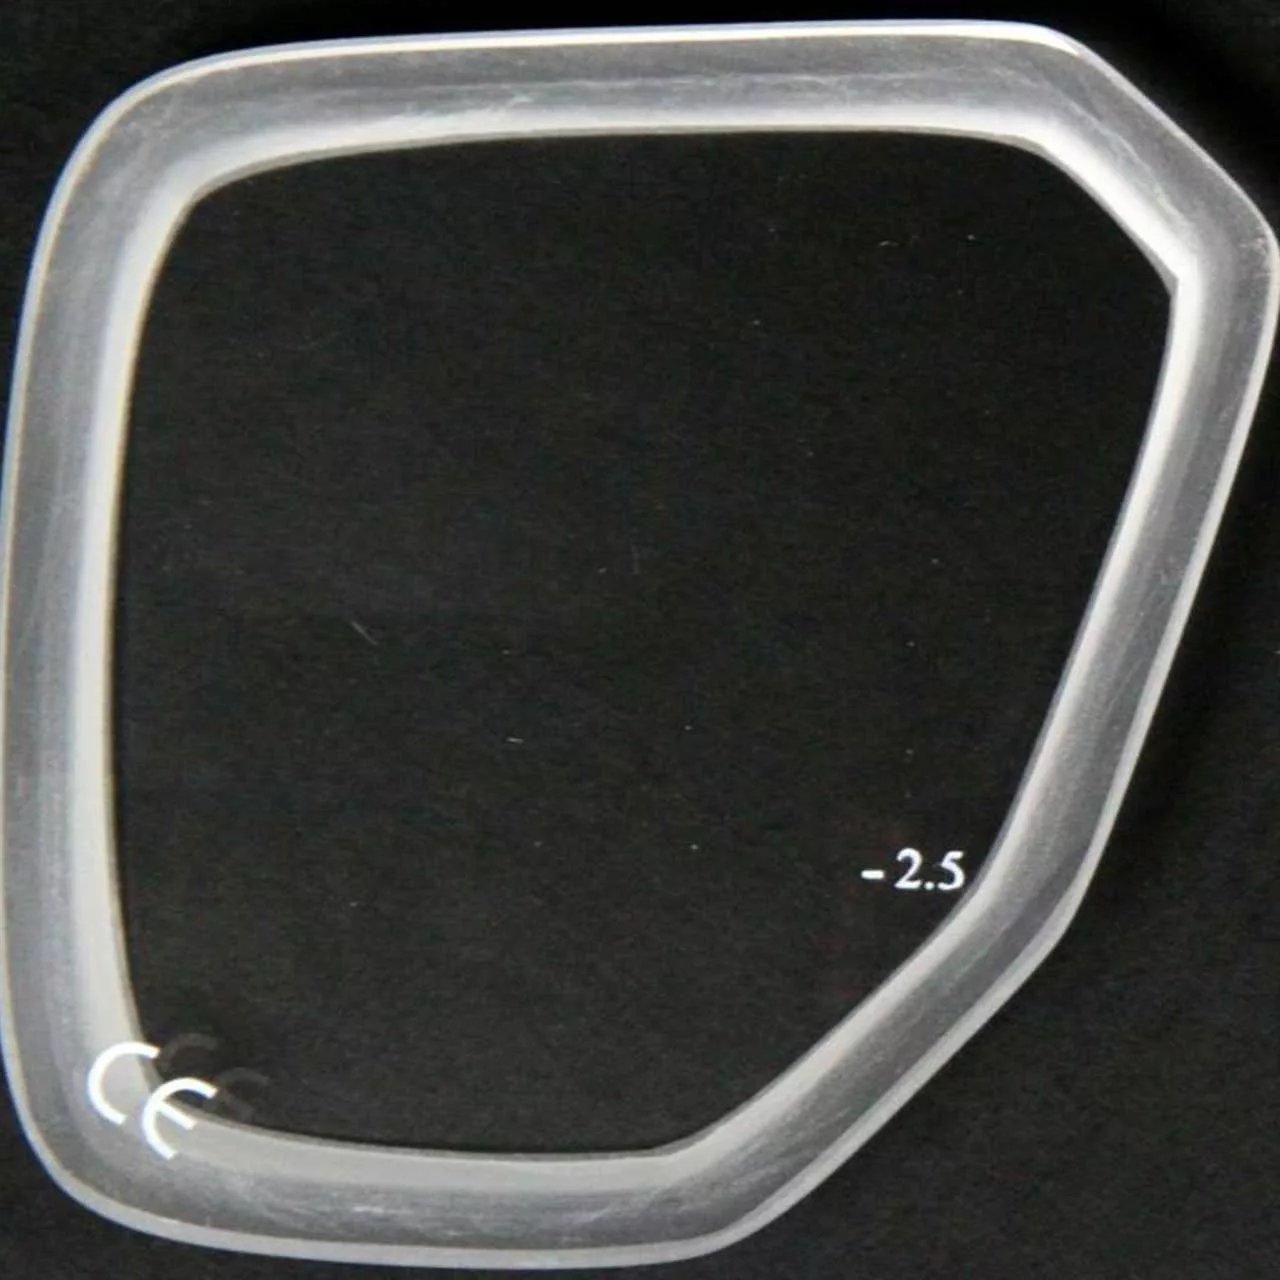 Tecline Correction Lens for Tiara Mask -2,5 R 37055